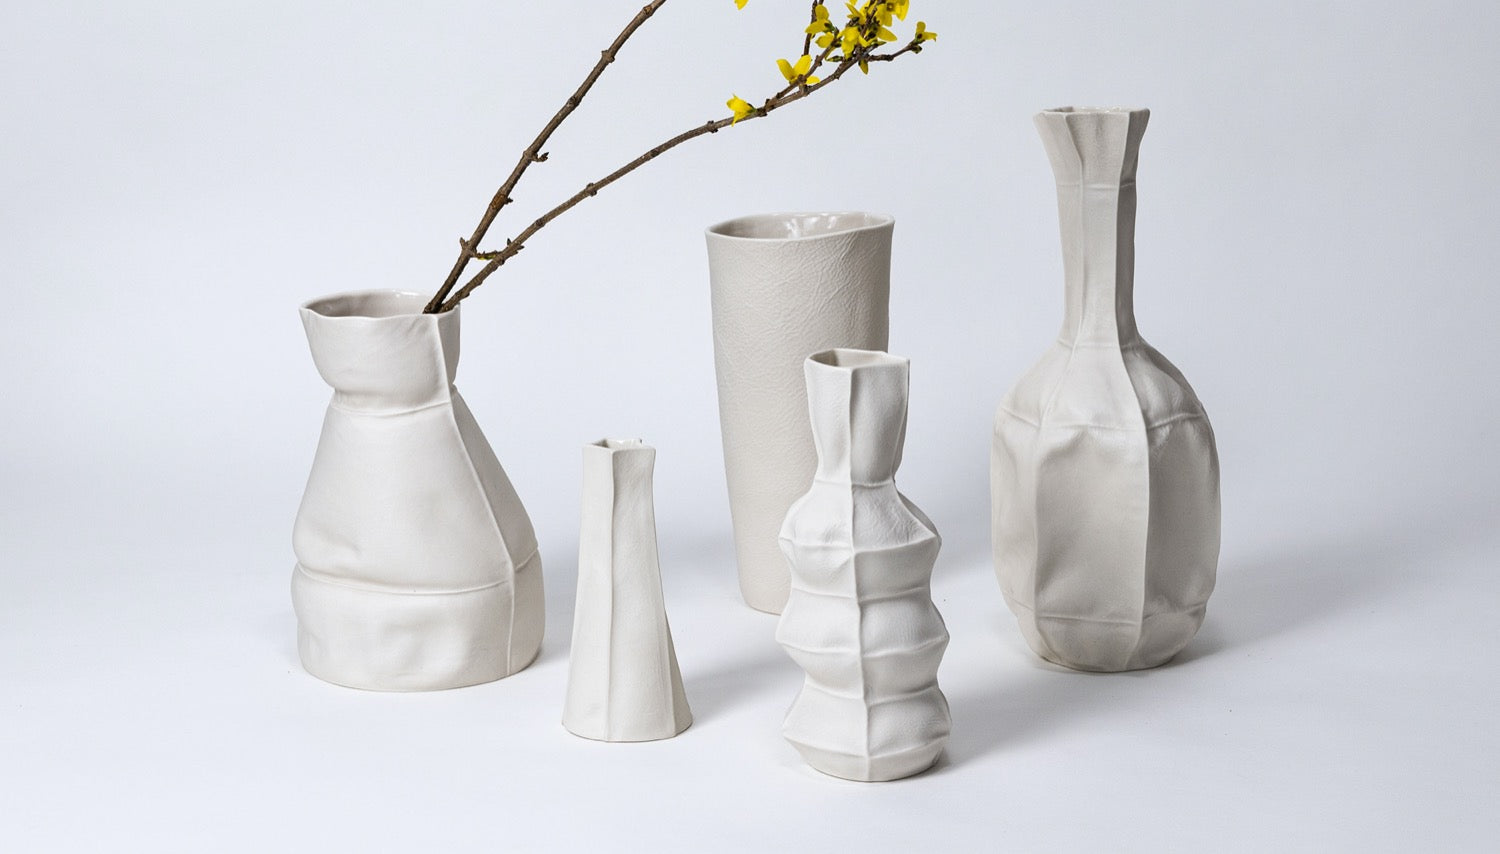 Kawa Porcelain Vases by Luft Tanaka